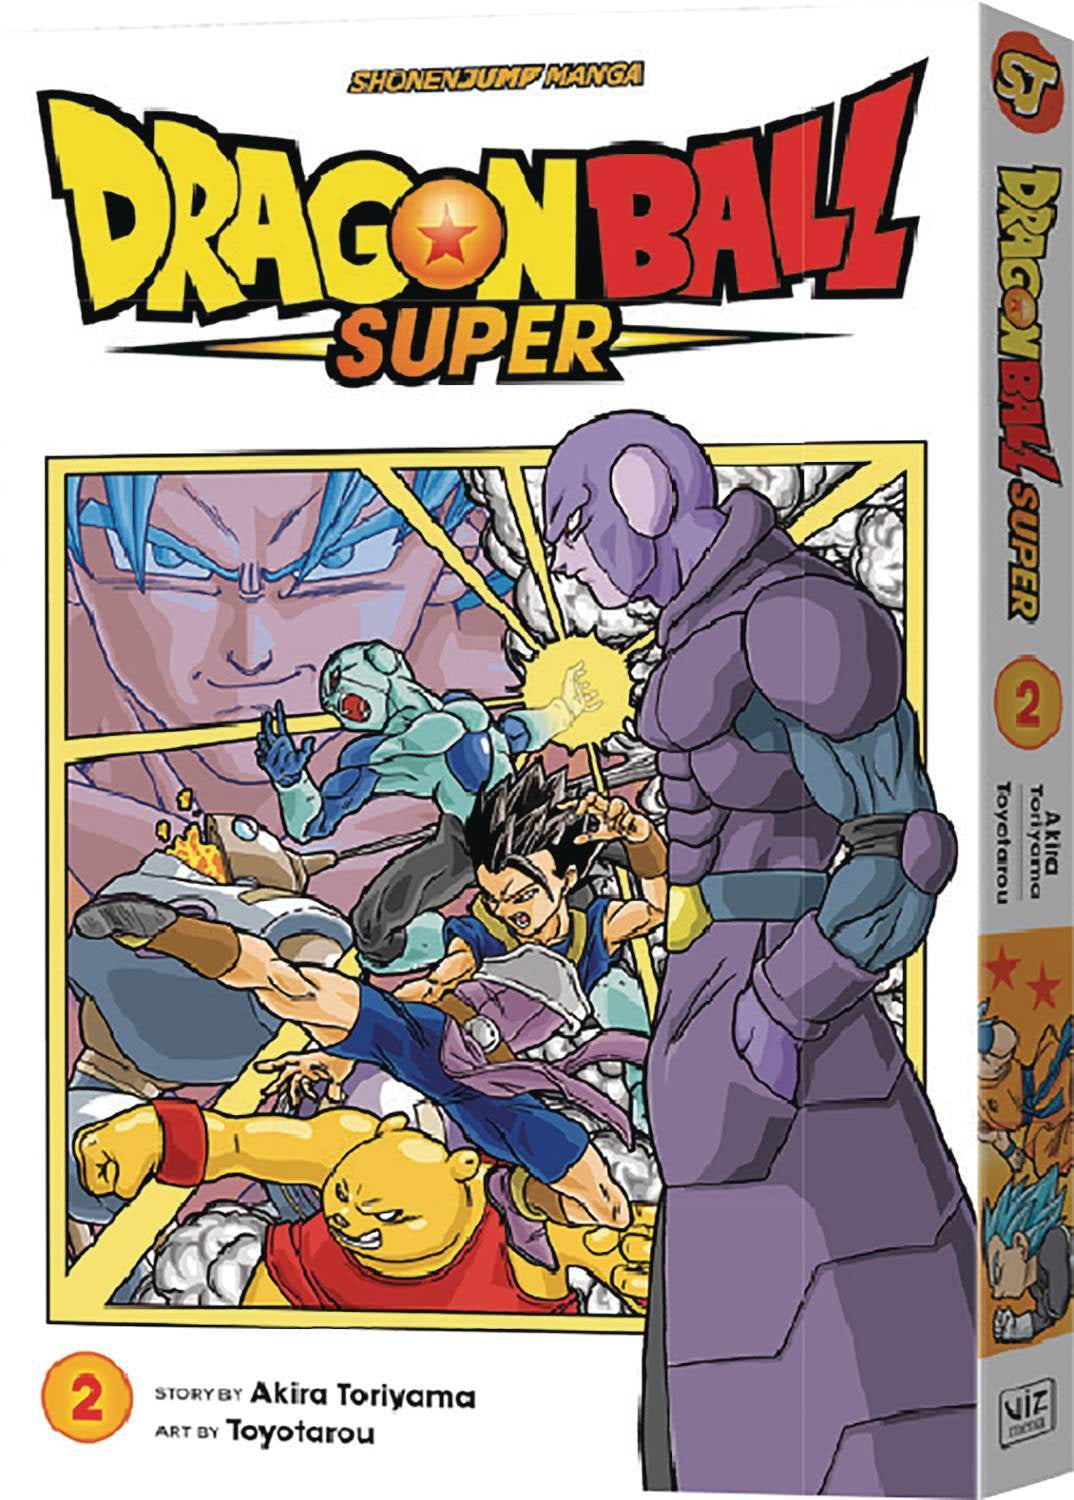 DRAGON BALL SUPER VOLUME 02